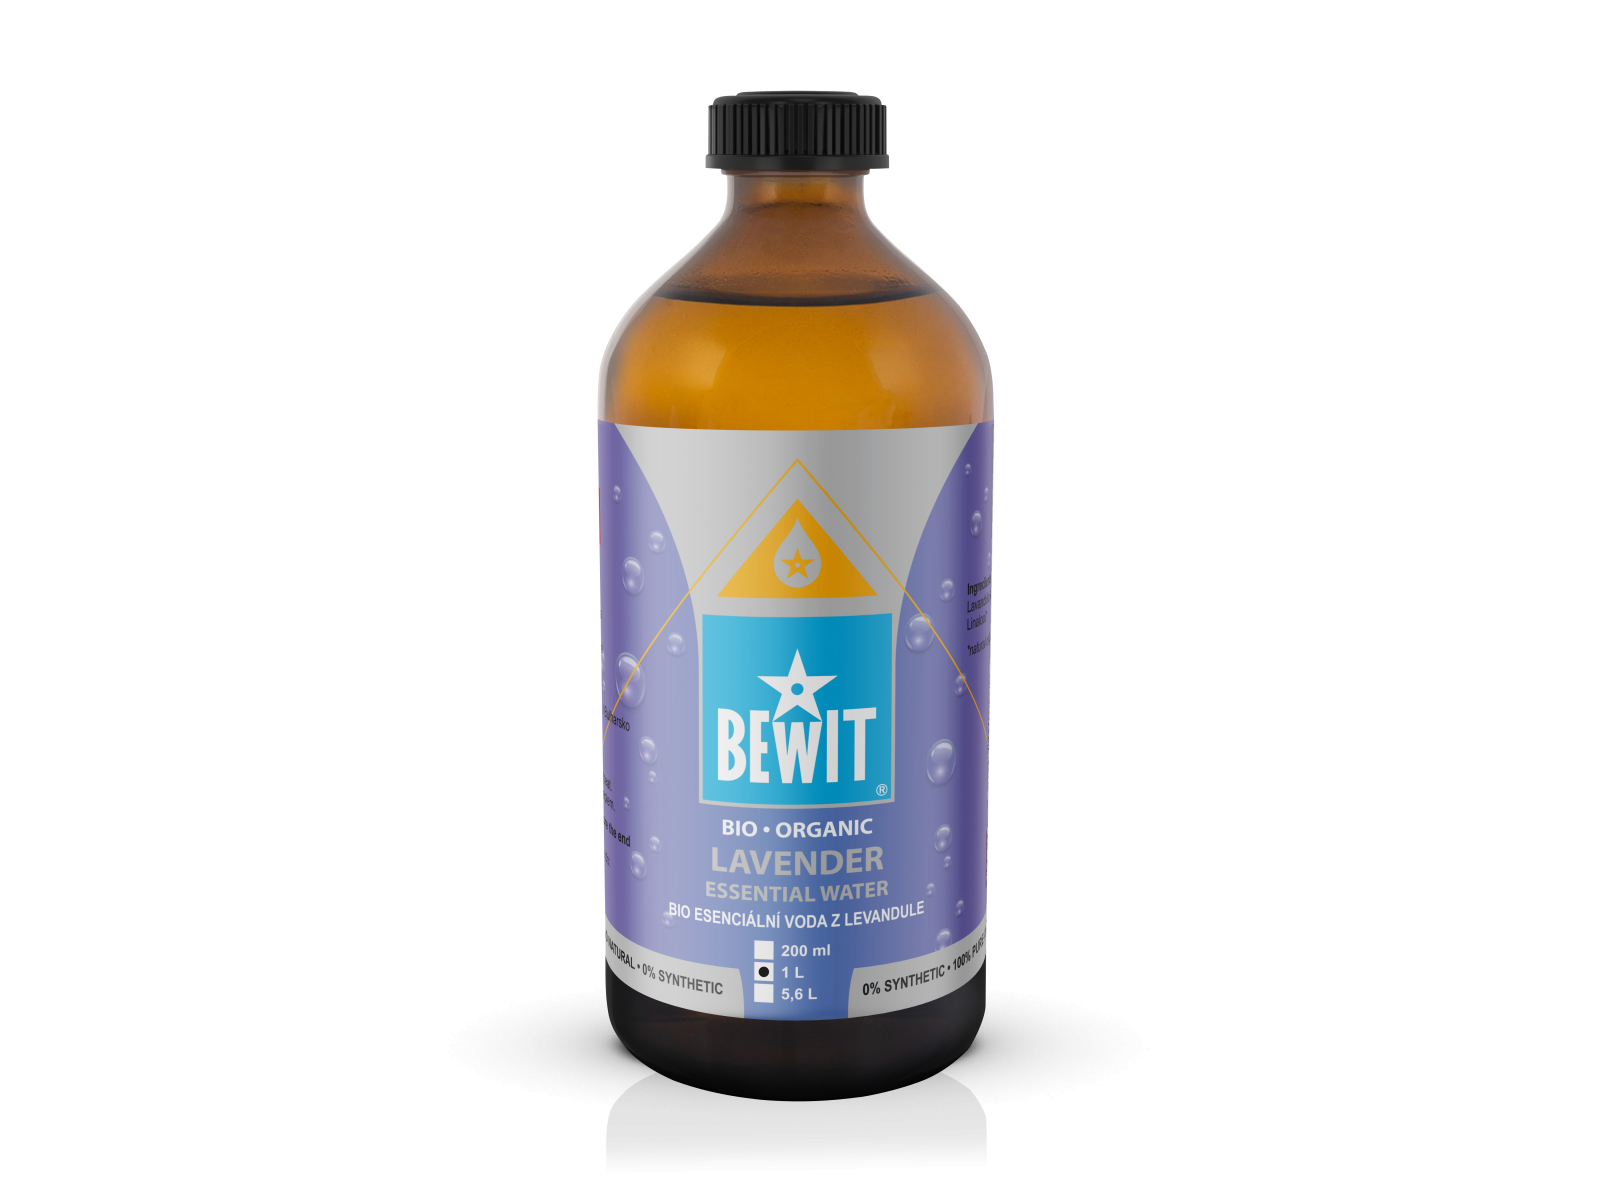 BEWIT ORGANIC lavender essential water - 100% NATURAL HYDROLYTE - 3